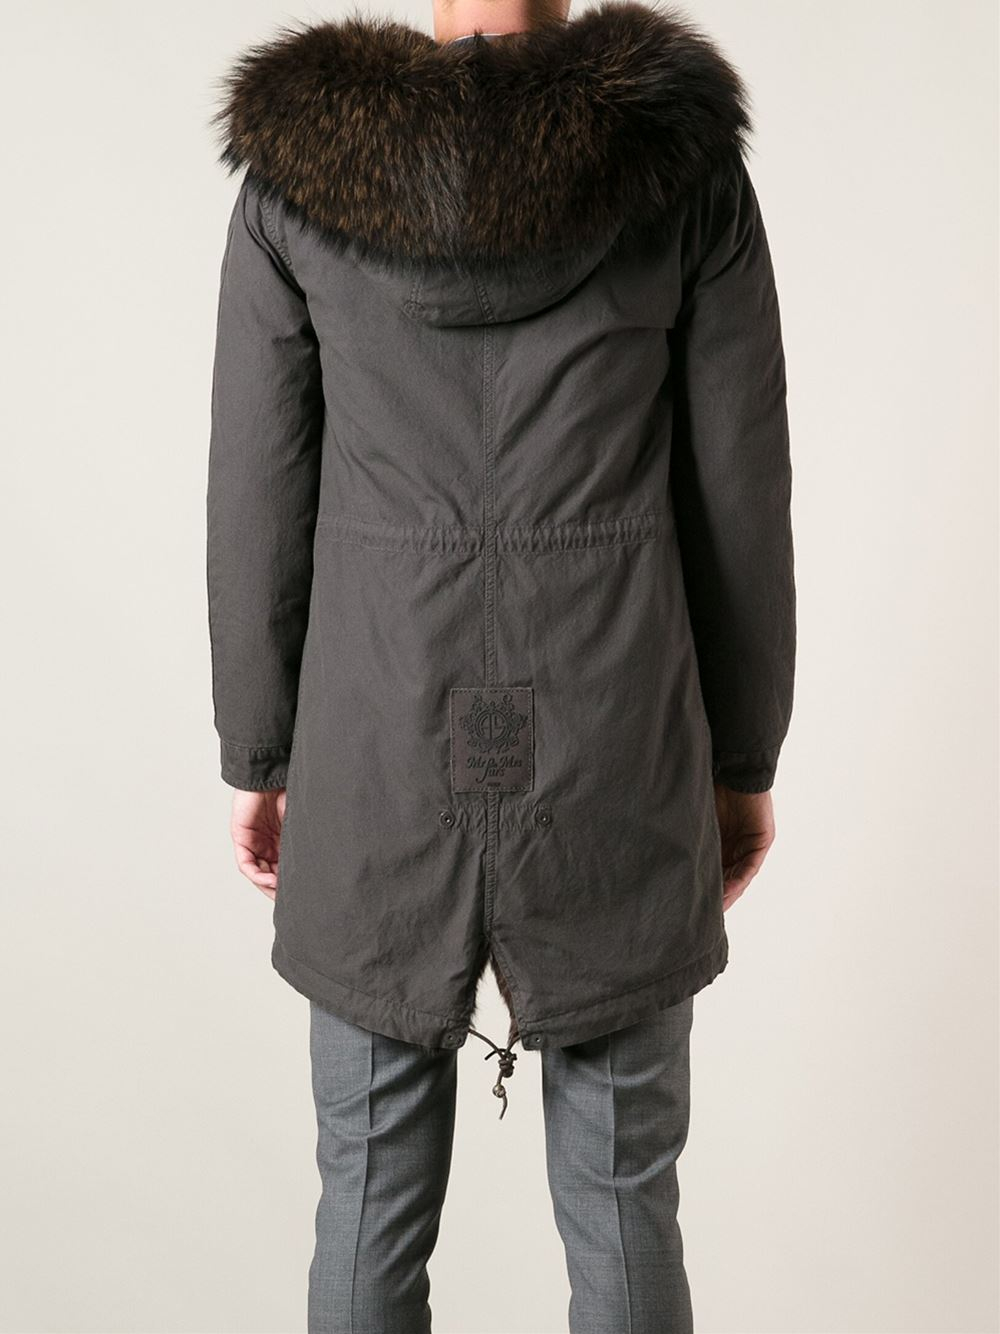 Lyst - Mr & Mrs Italy Fur Collar Parka Coat in Brown for Men